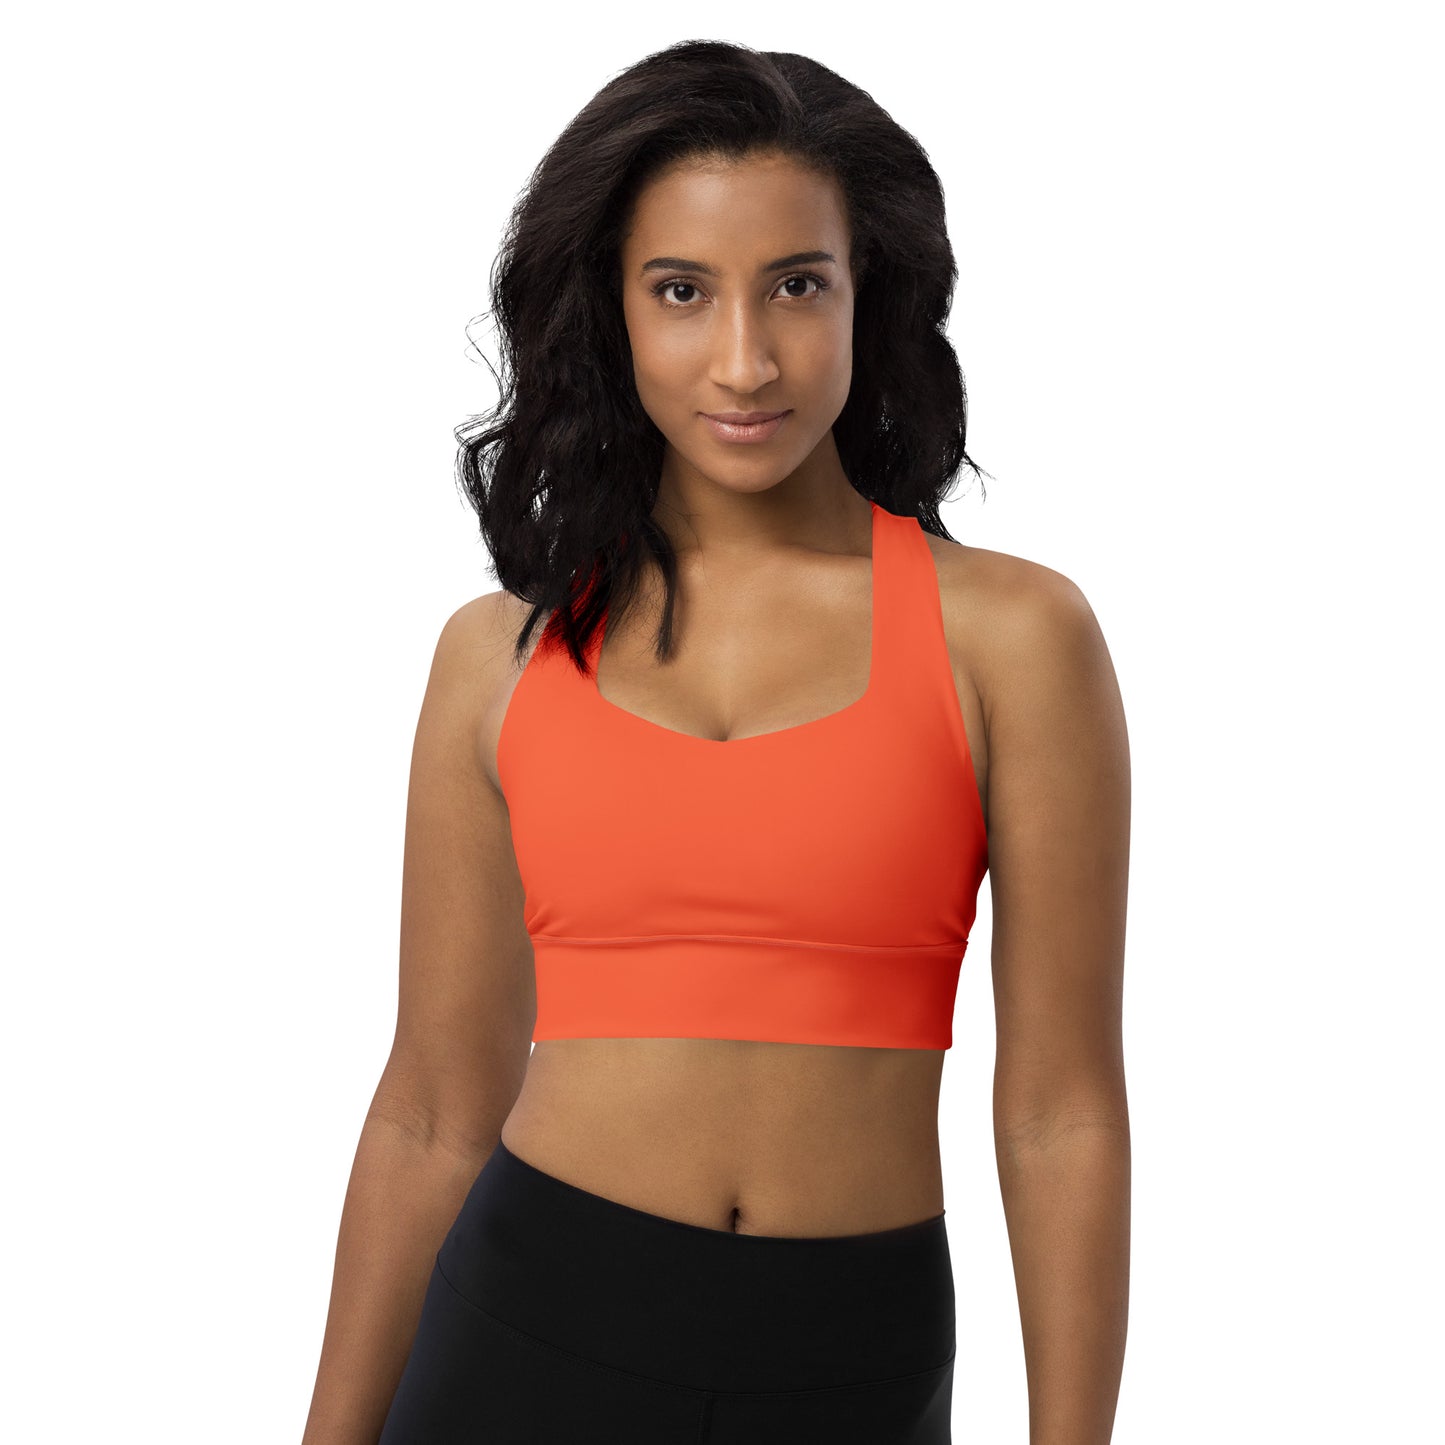 AFA Basics Solid Outrageous Orange Longline sports bra